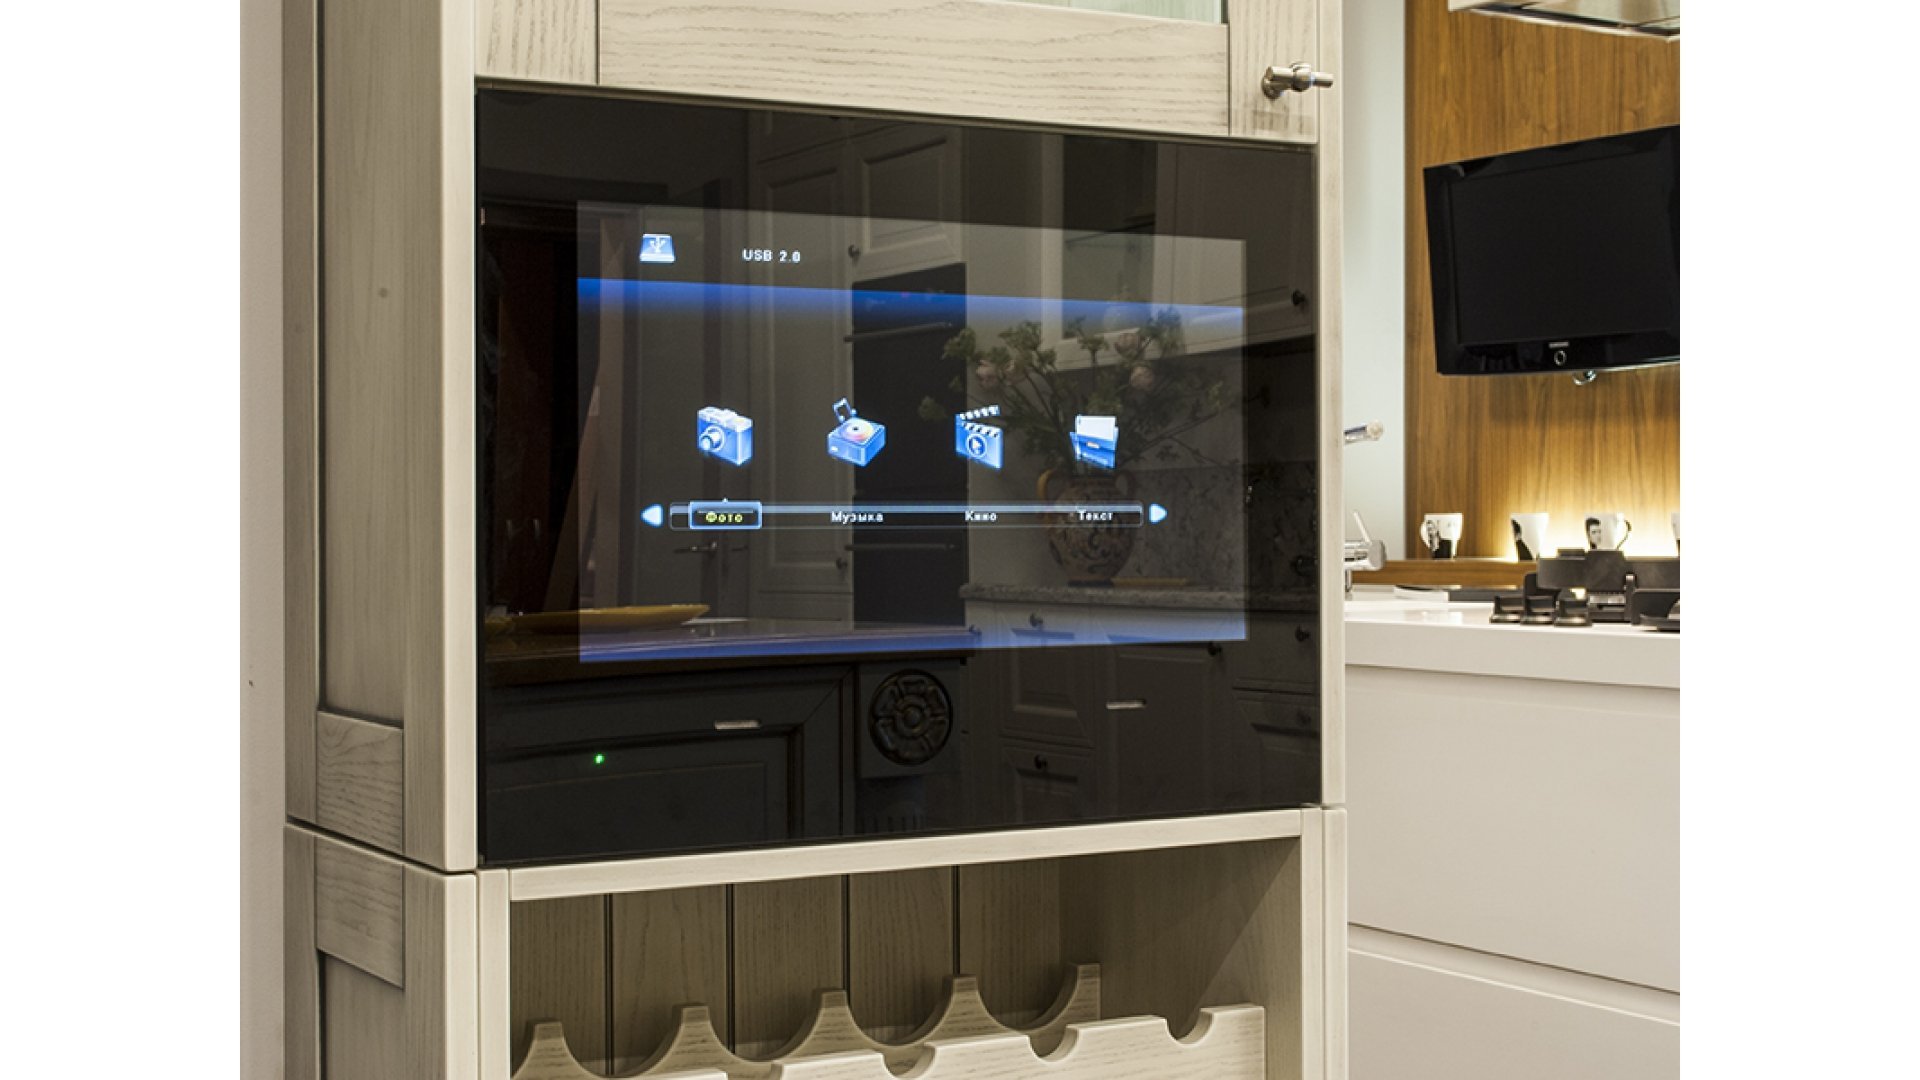 Встроенные телевизоры для кухни. Avel avs220k. Телевизор для кухни avs220k. Телевизор Avel встраиваемый для кухни. Телевизор встроенный в кухню.